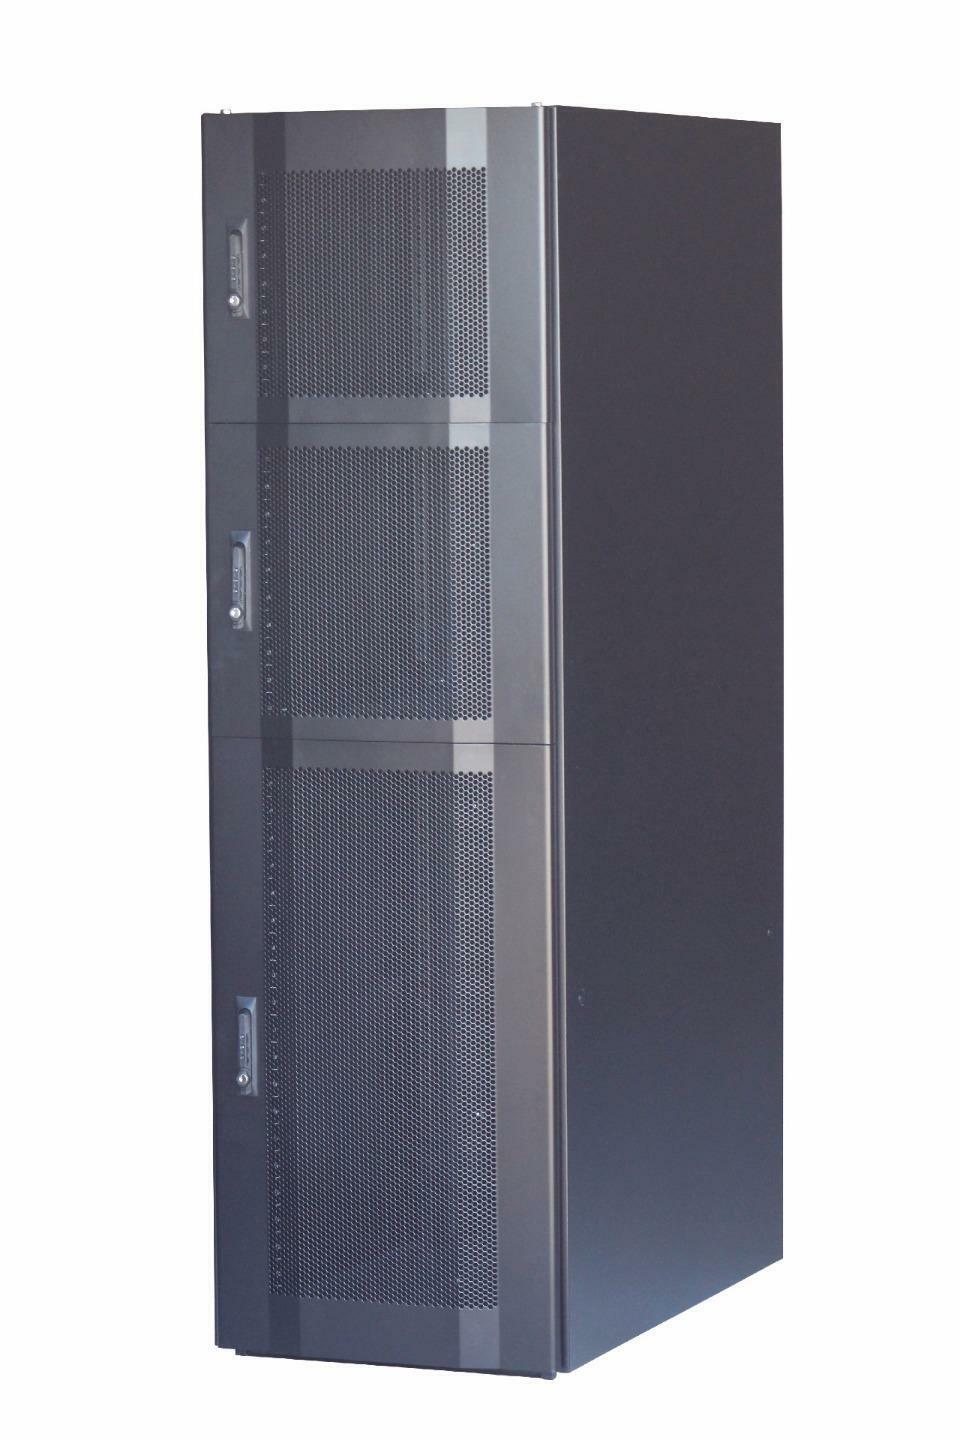 New DSI 3 Compartment CoLocation Server Rack-DSI 1342A 42U Server Rack Cabinet